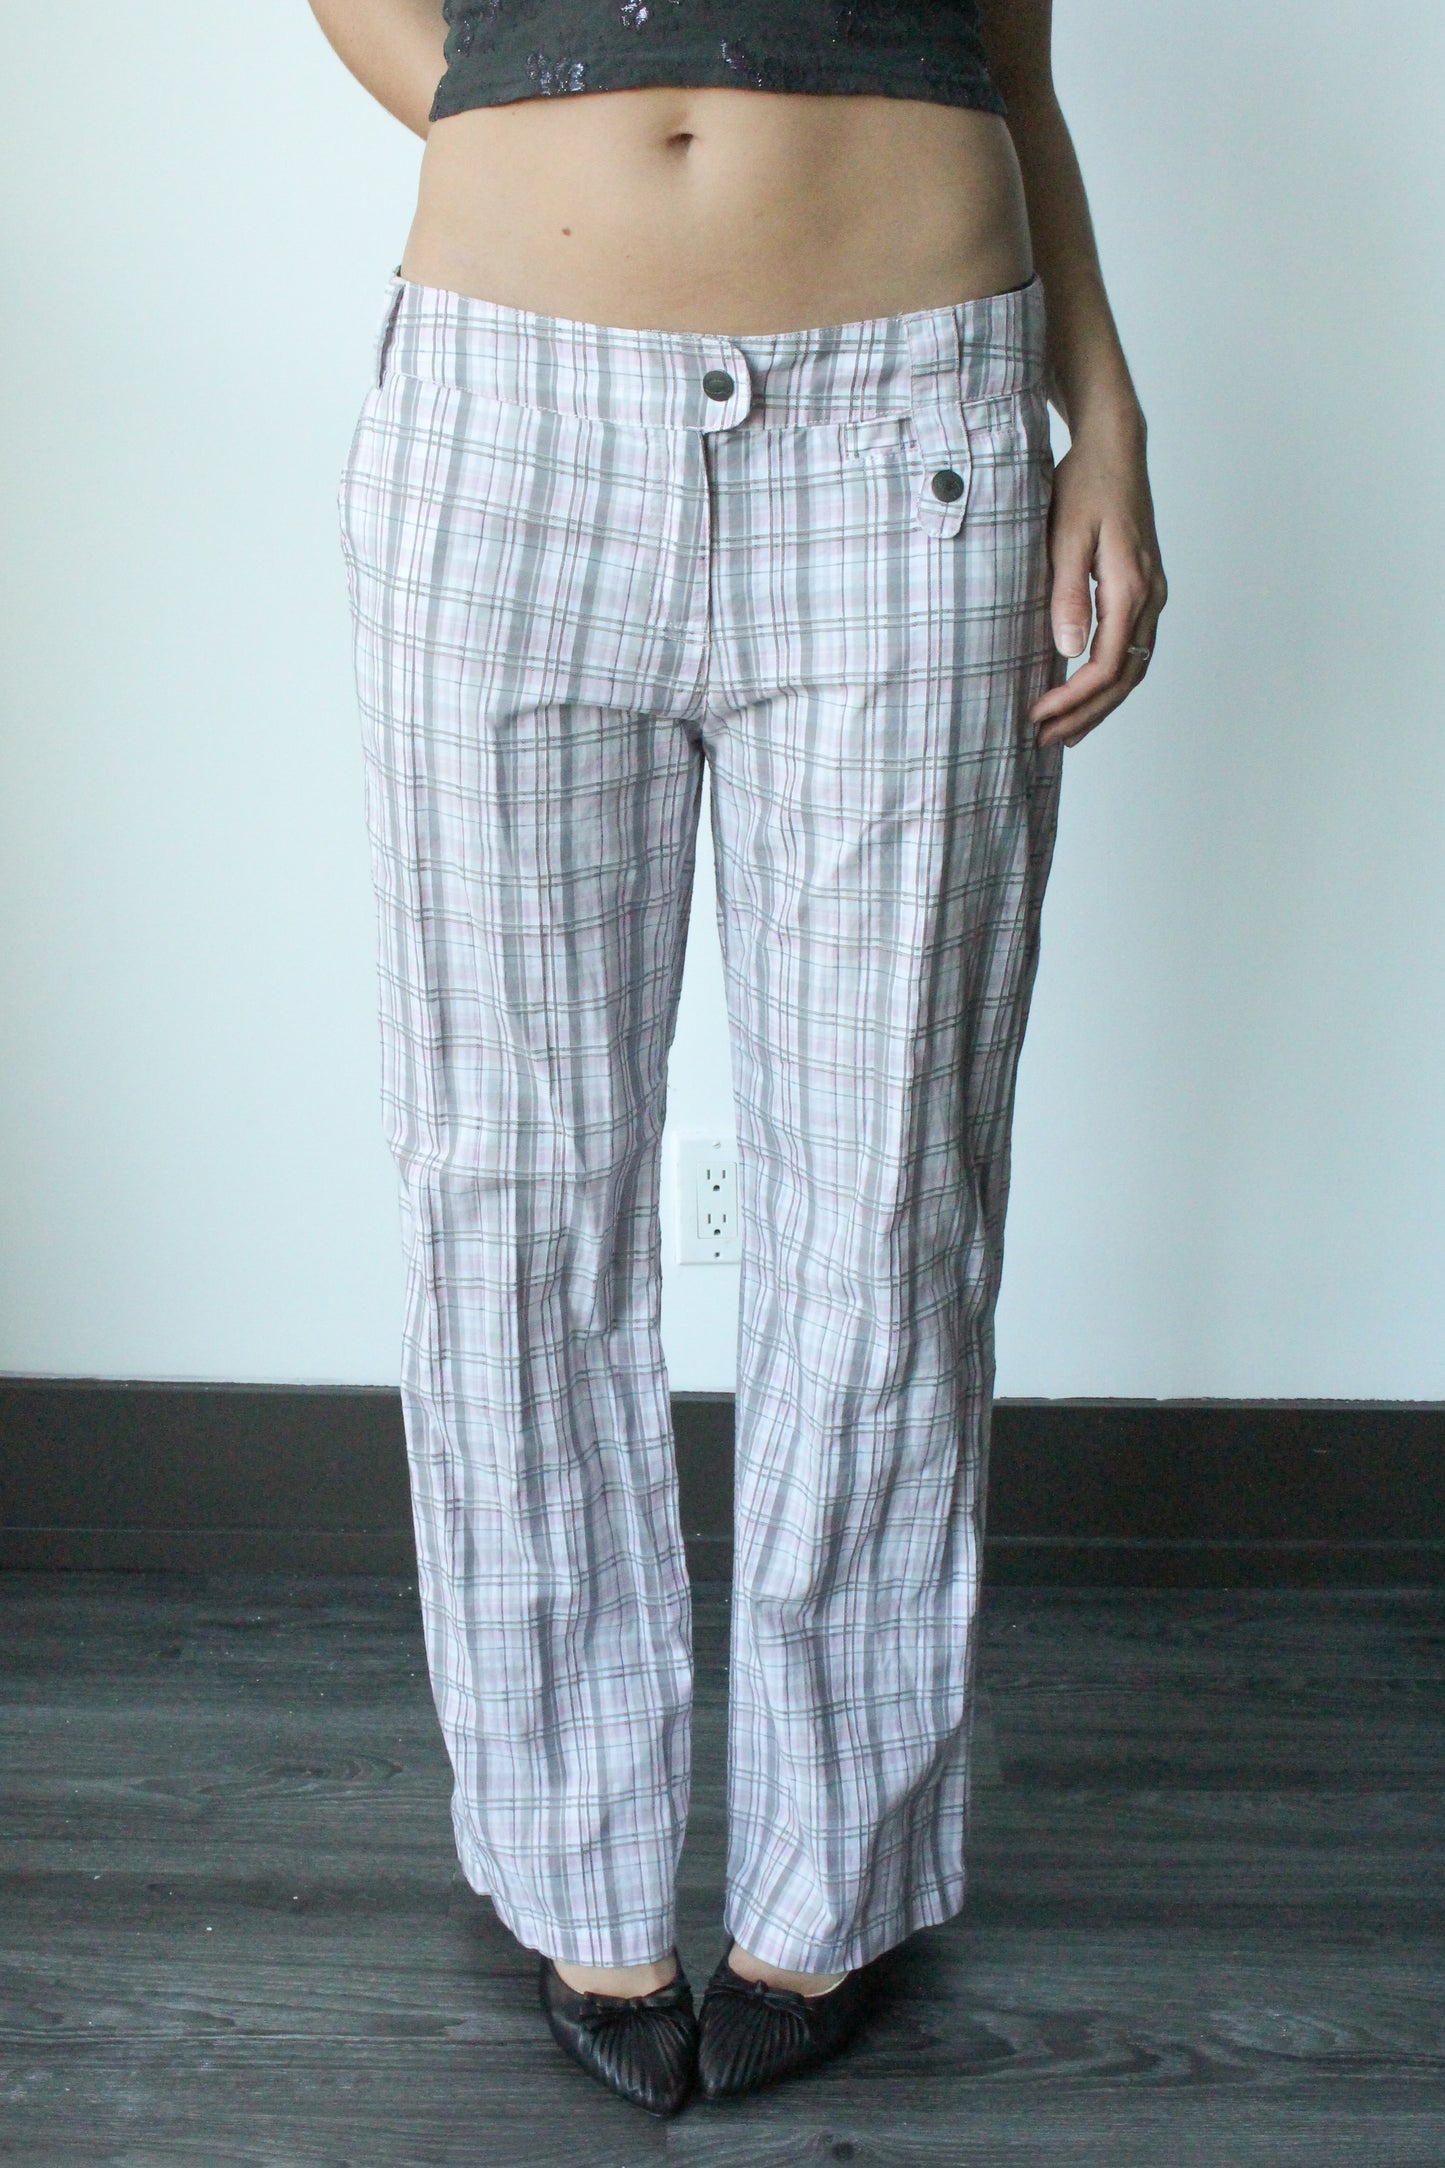 pink/ grey plaid pants- SZ S/M